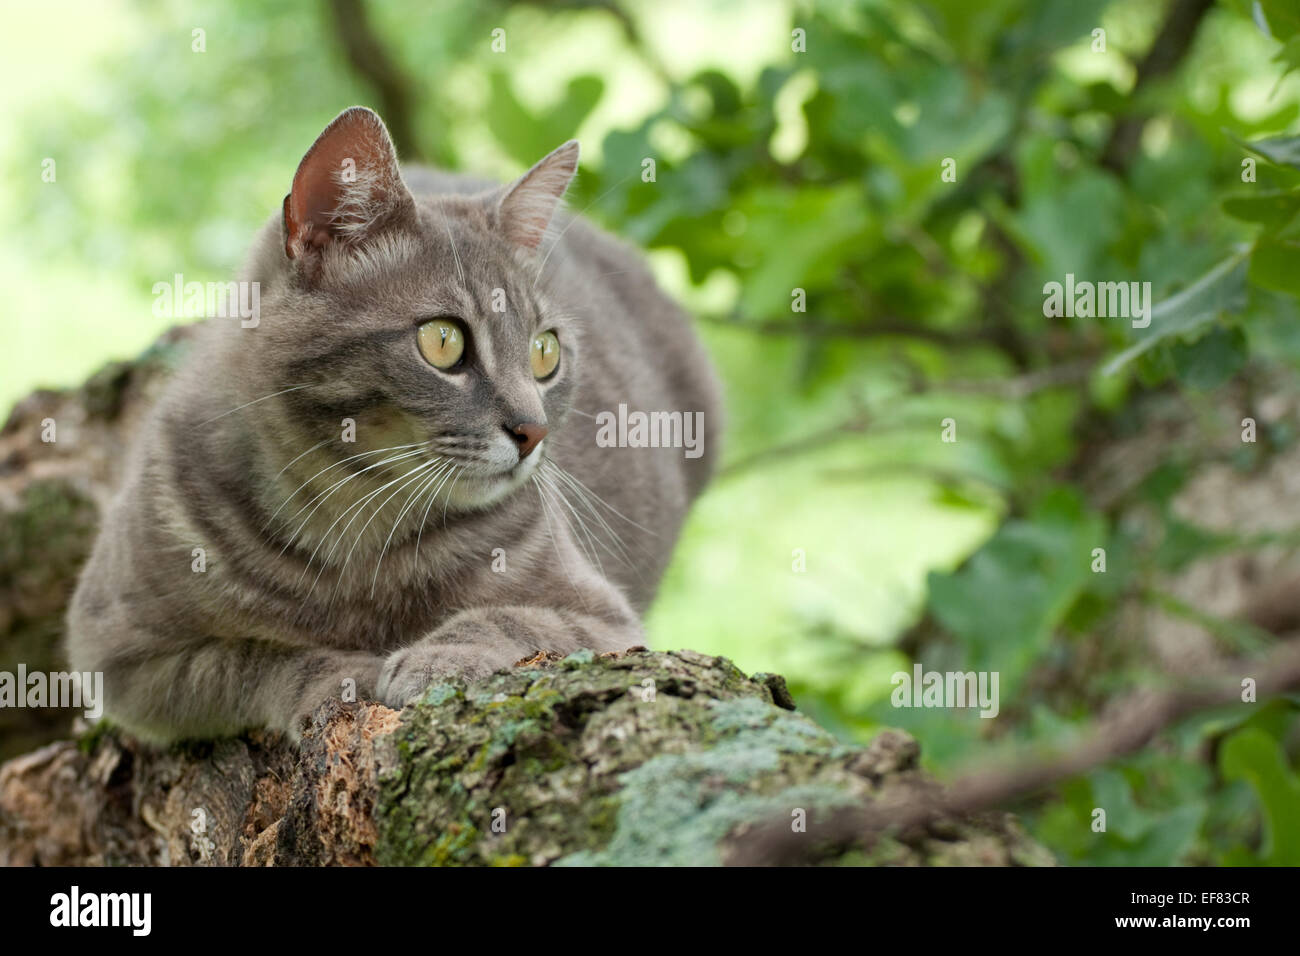 Blue Spotted Tabby cat in una struttura ad albero Foto Stock